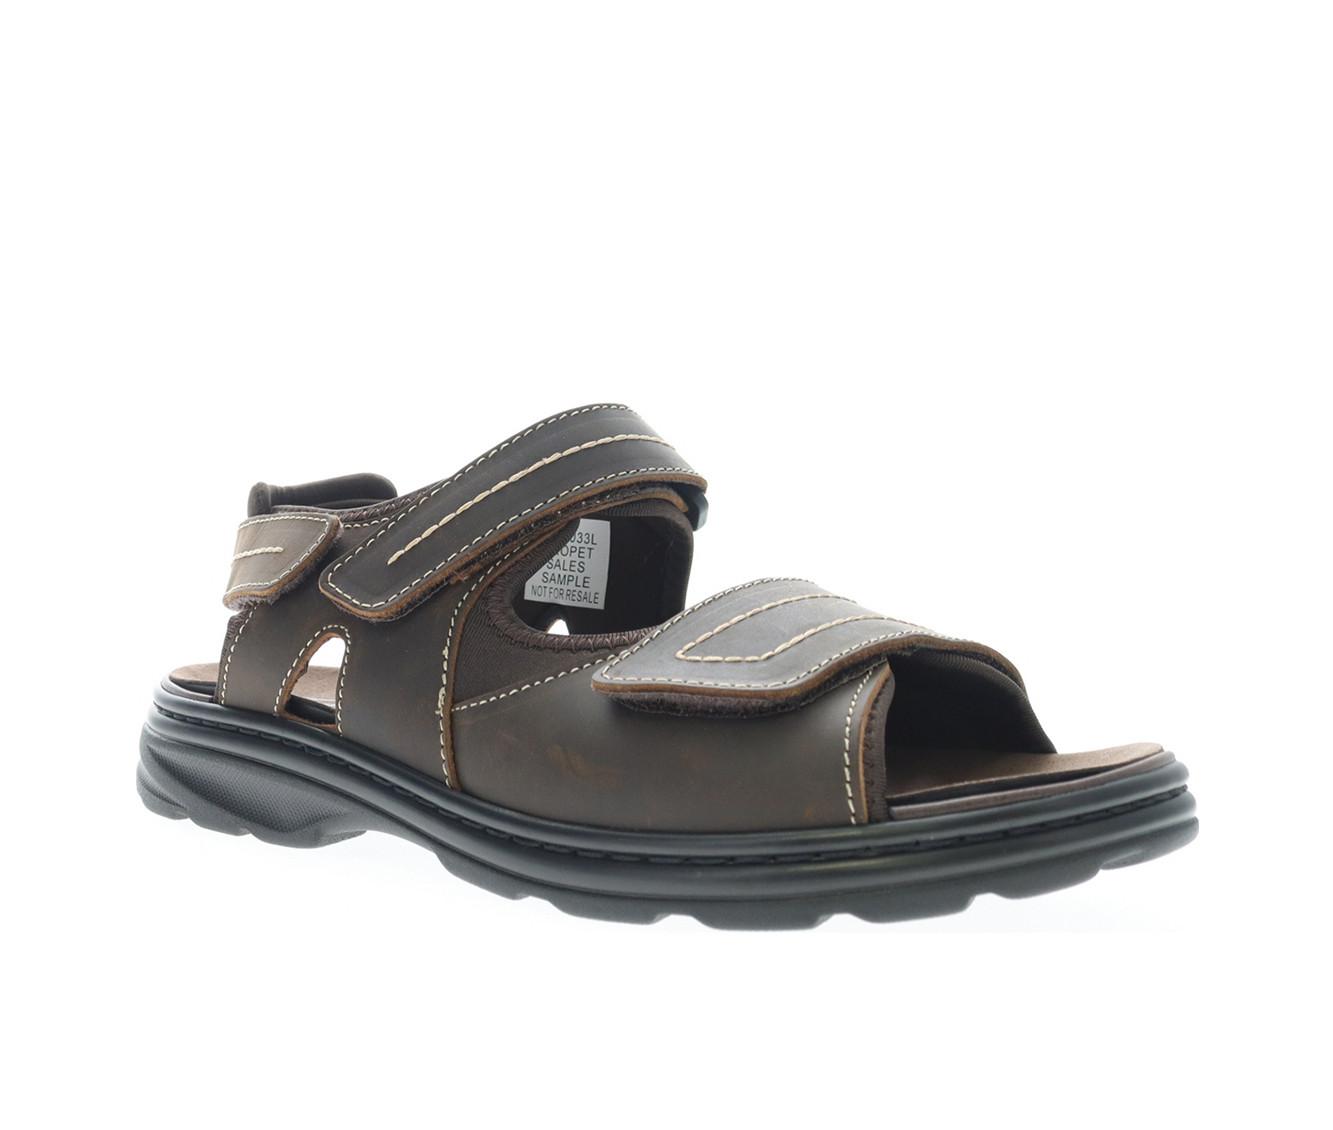 Men's Propet Hudson Outdoor Sandals